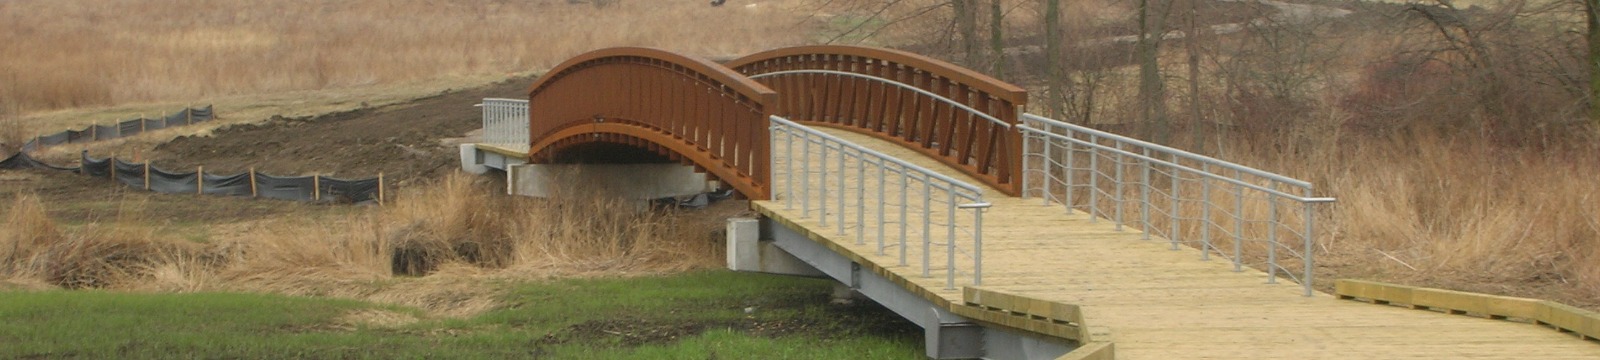 Recreational trail and bridge under construction